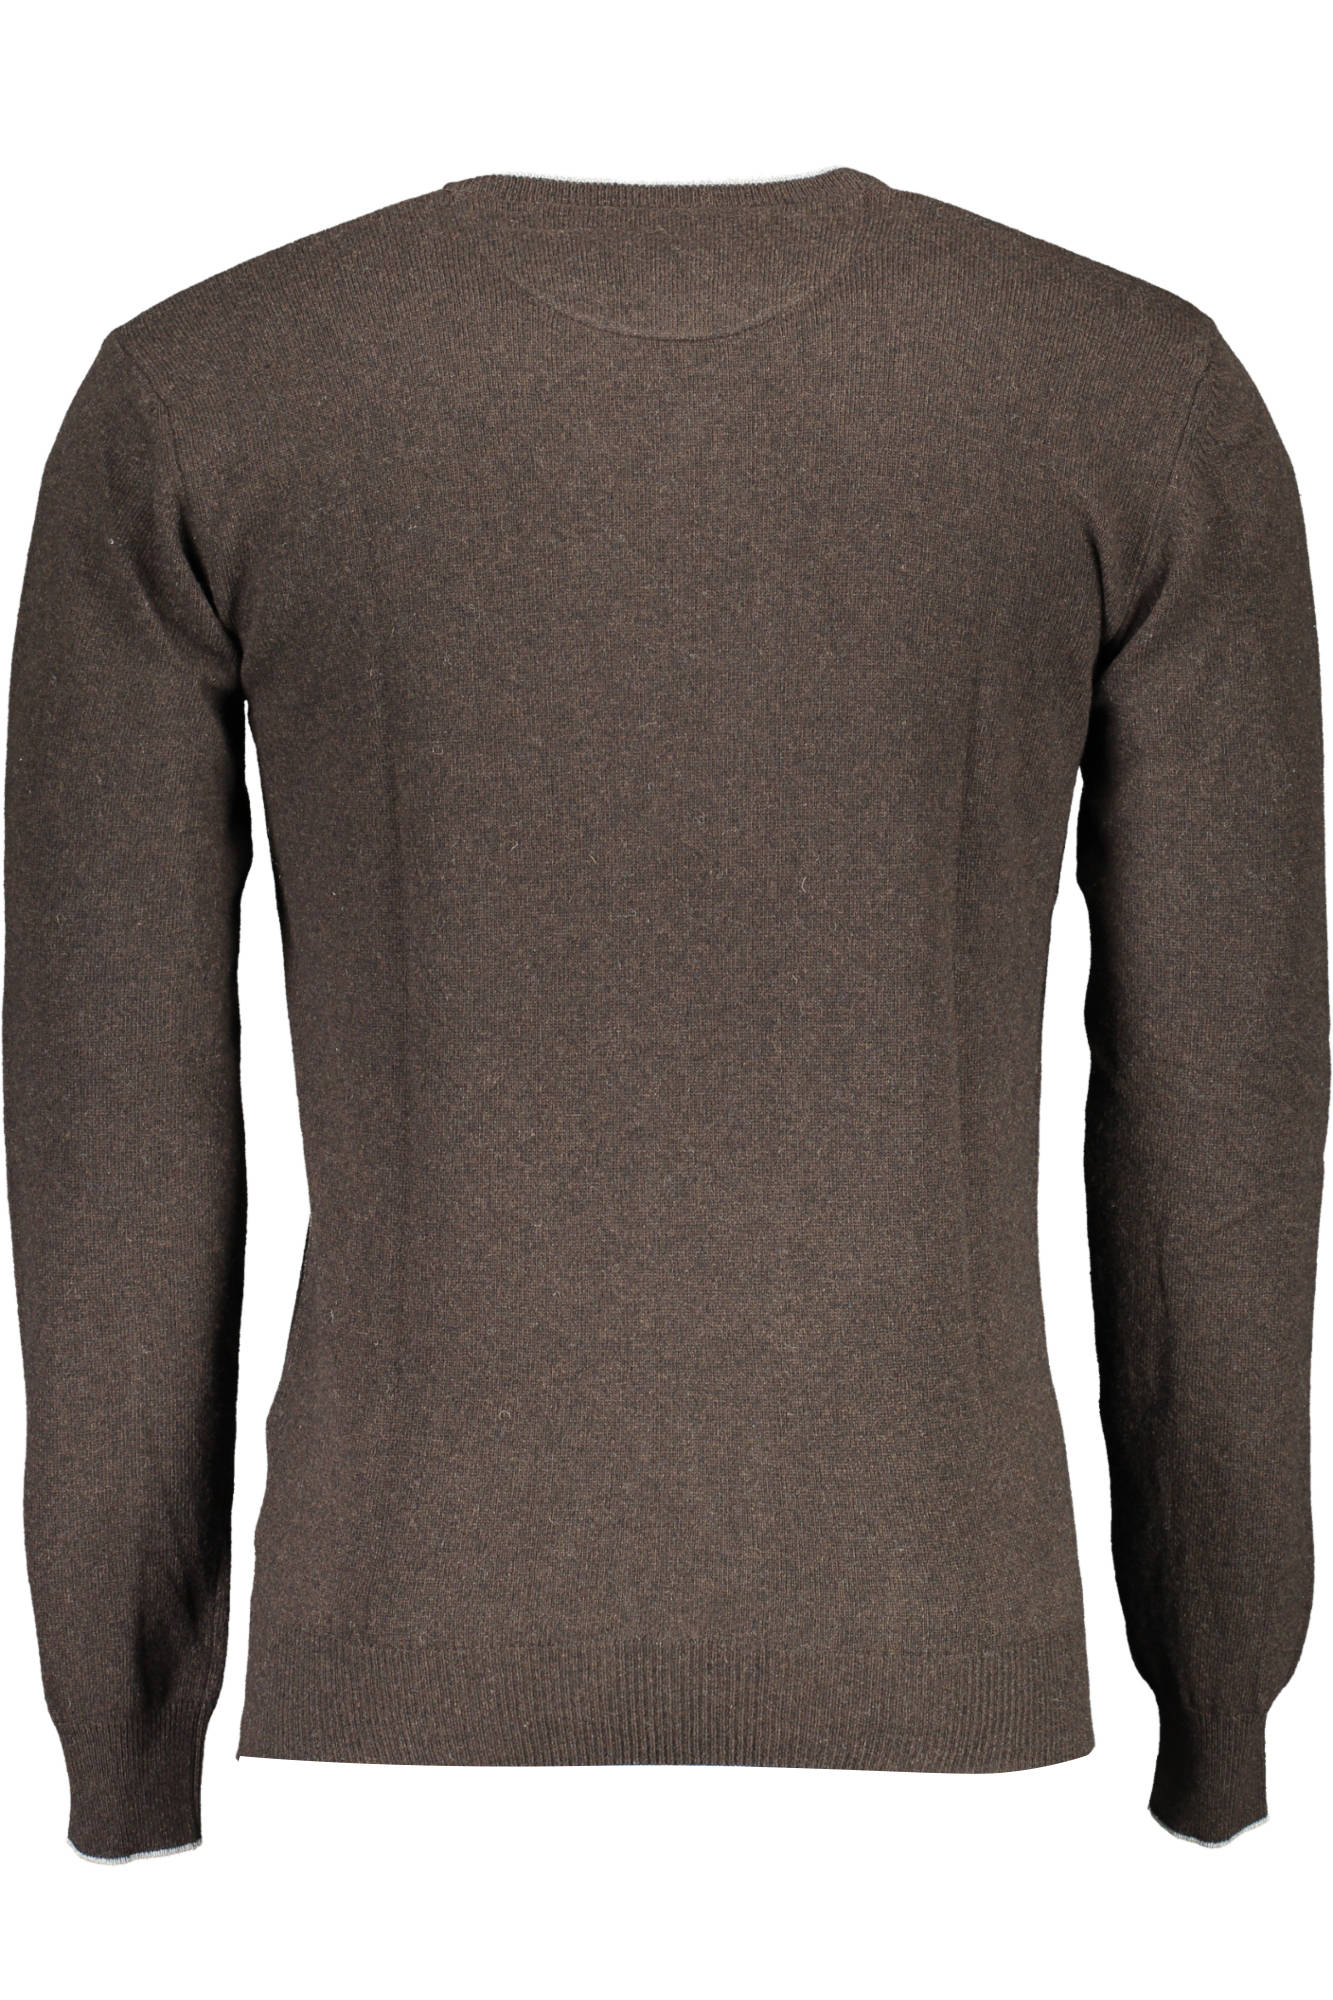 U.S. POLO ASSN. Brown Sweater - Fizigo